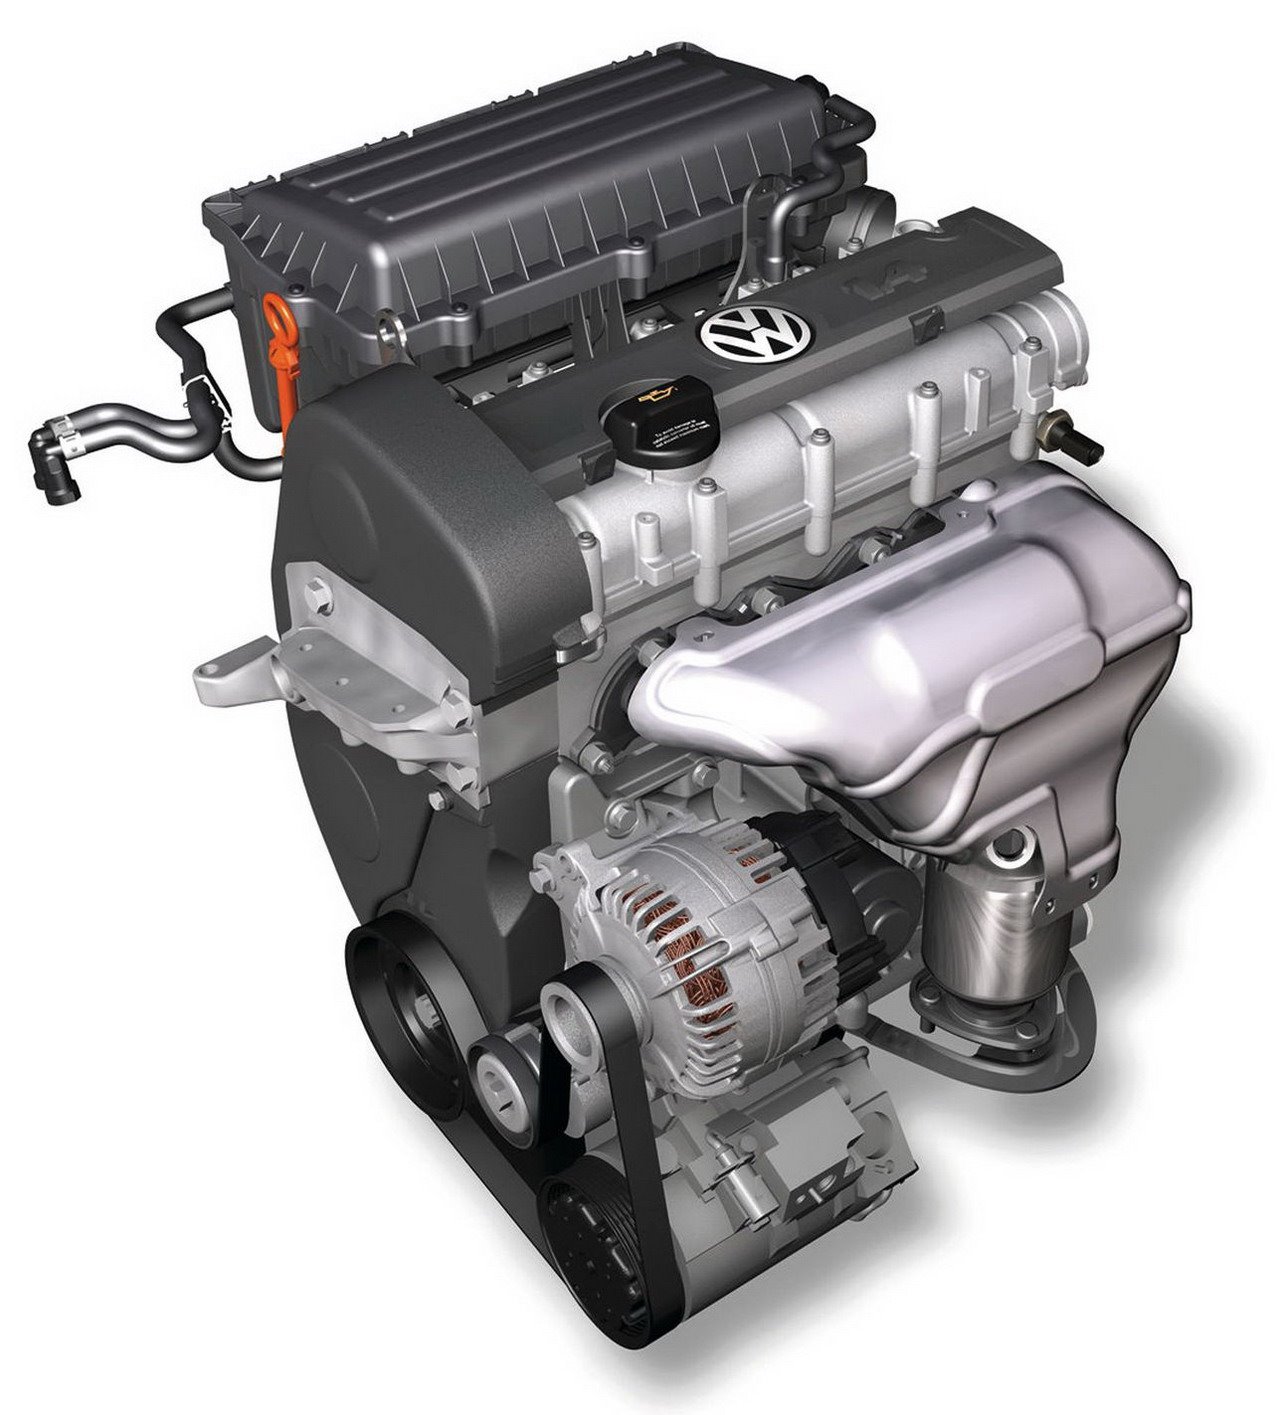 Volkswagen polo мотор. Мотор поло седан 1.6. Мотор Polo 1.6 MPI. Двигатель Volkswagen Polo 1.4. Двигатель Фольксваген поло седан 1.6 105.